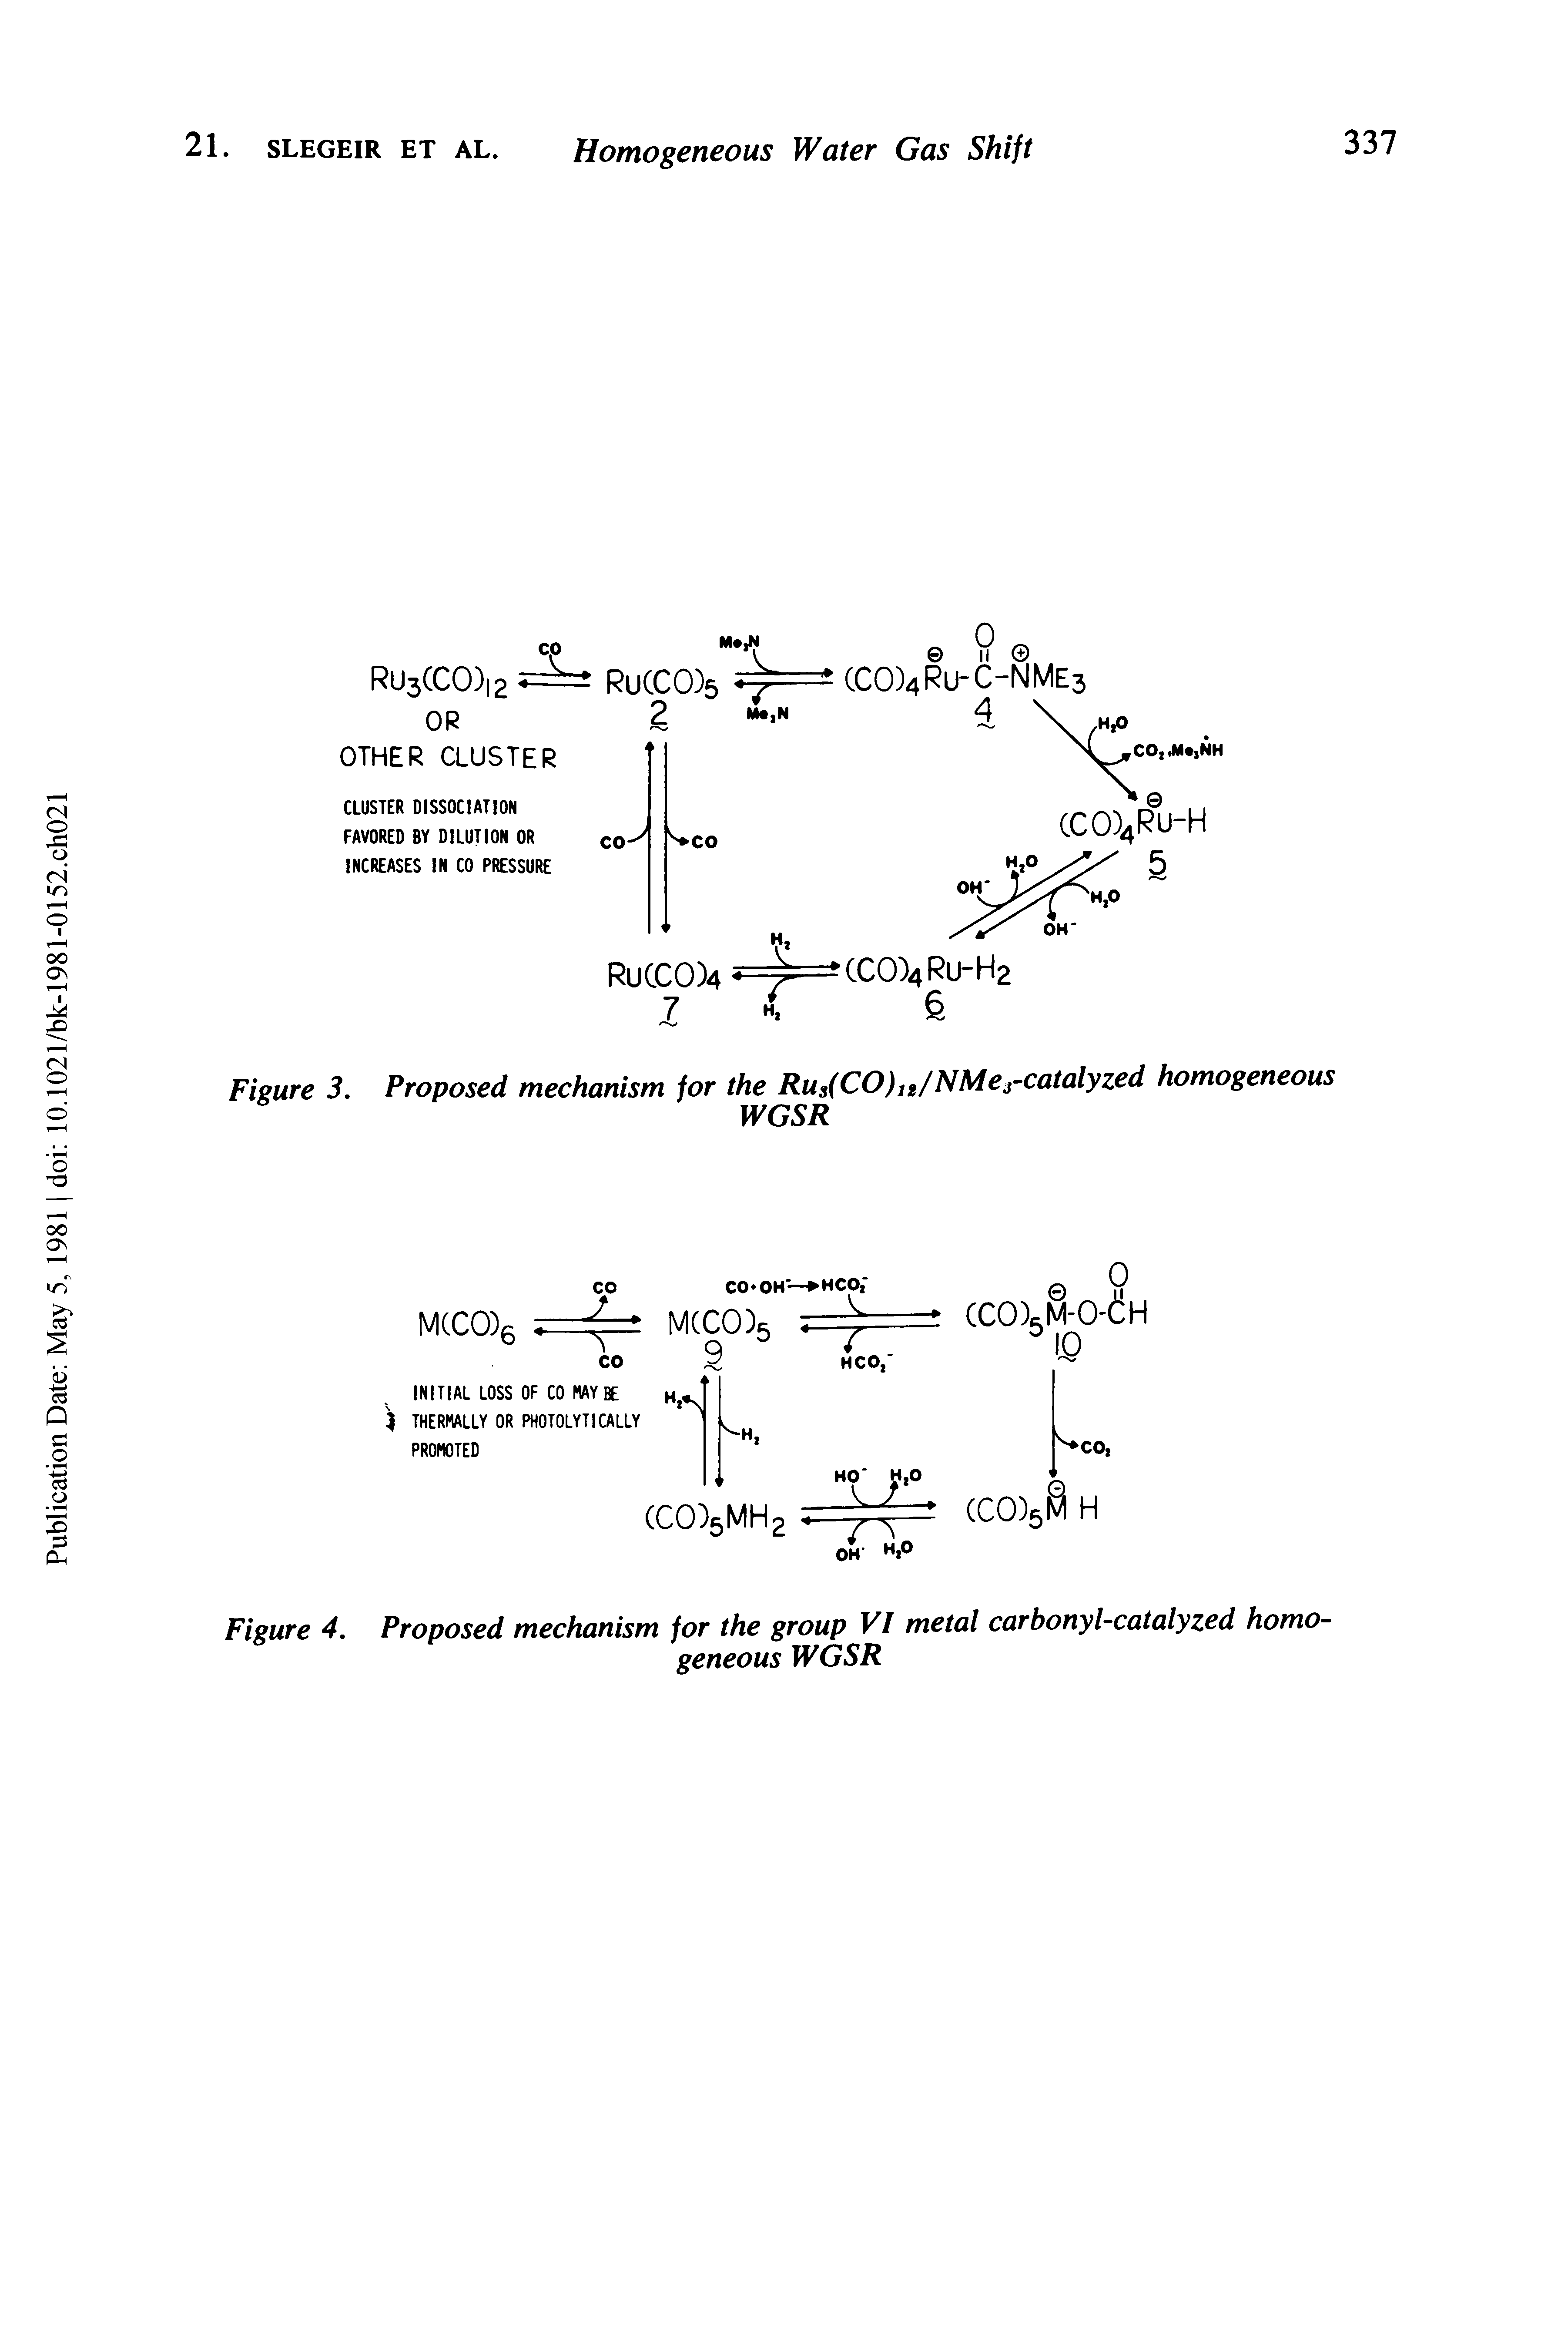 Figure 4. Proposed mechanism for the group VI metal carbonyl-catalyzed homogeneous WGSR...